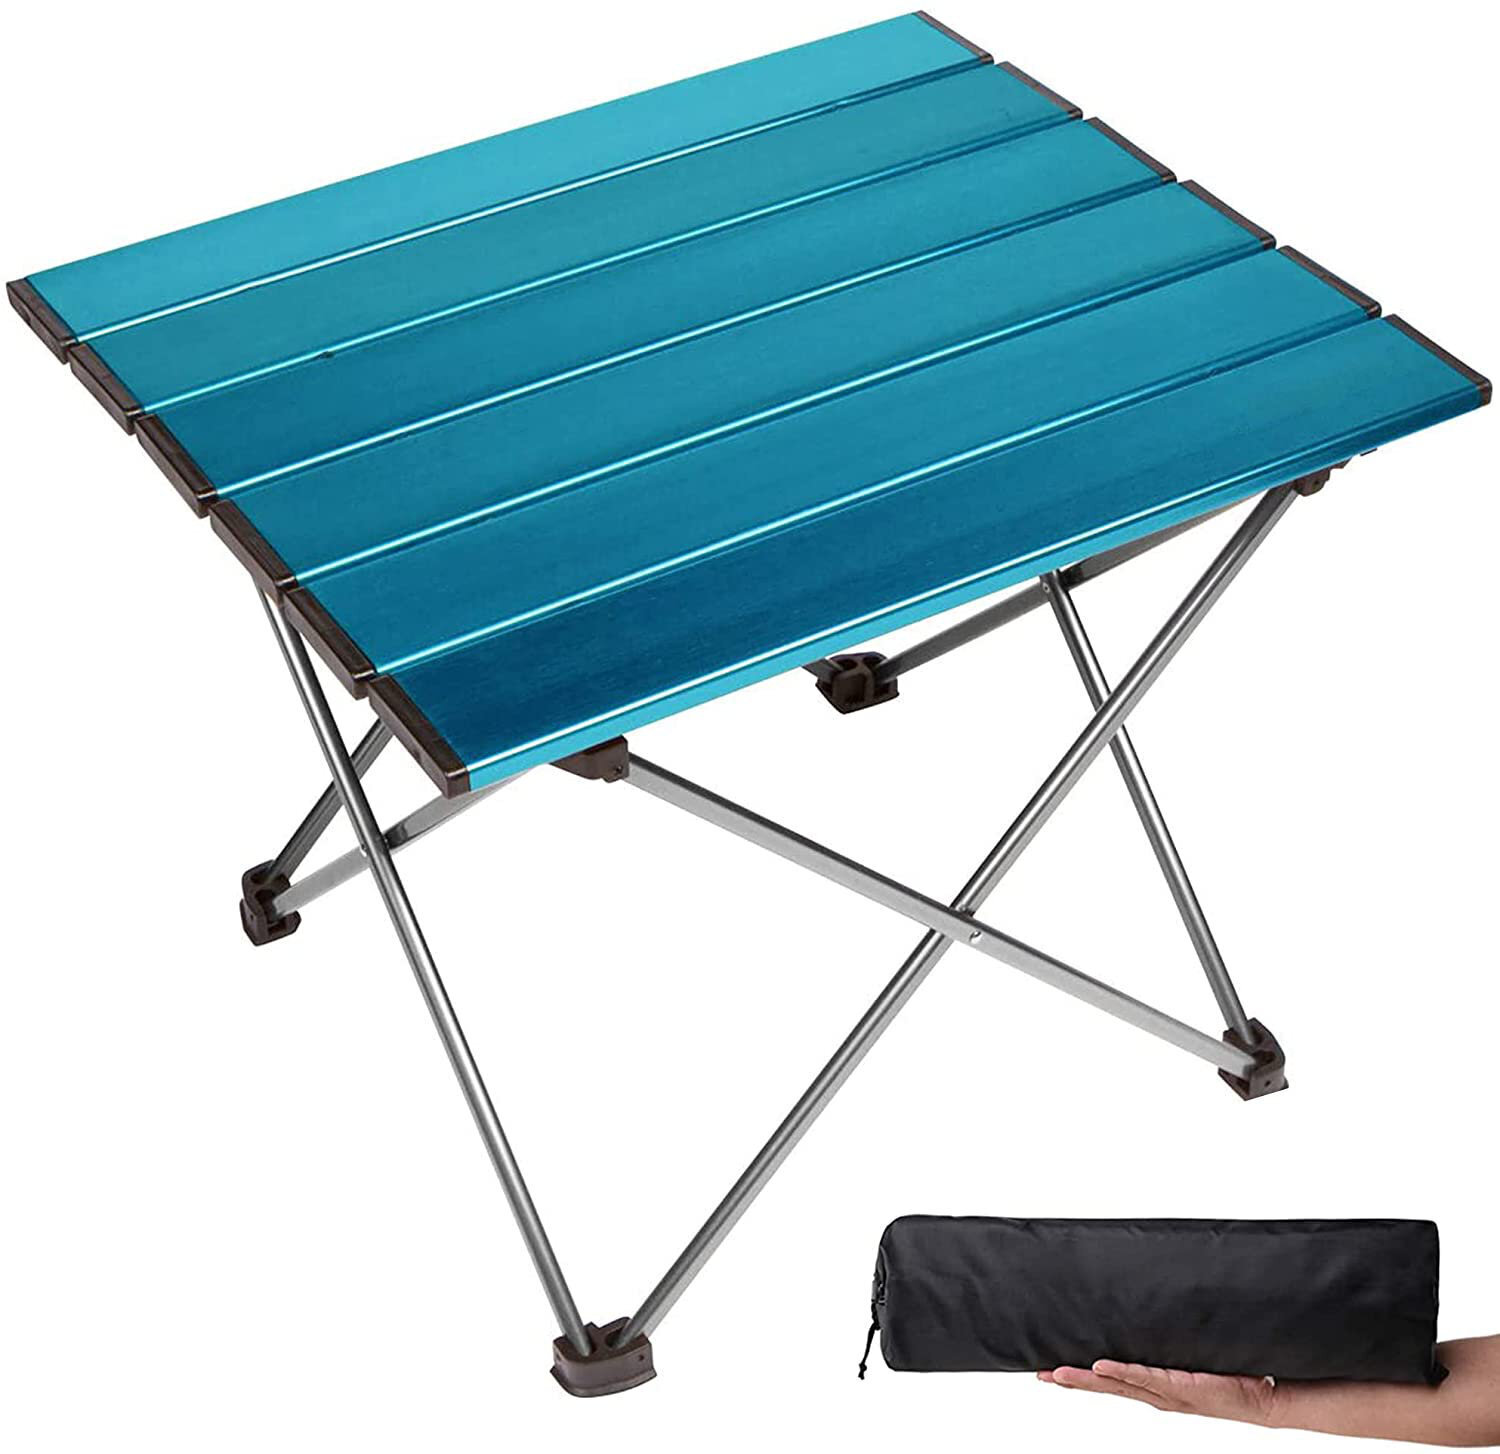 Folding Metal Camping Table